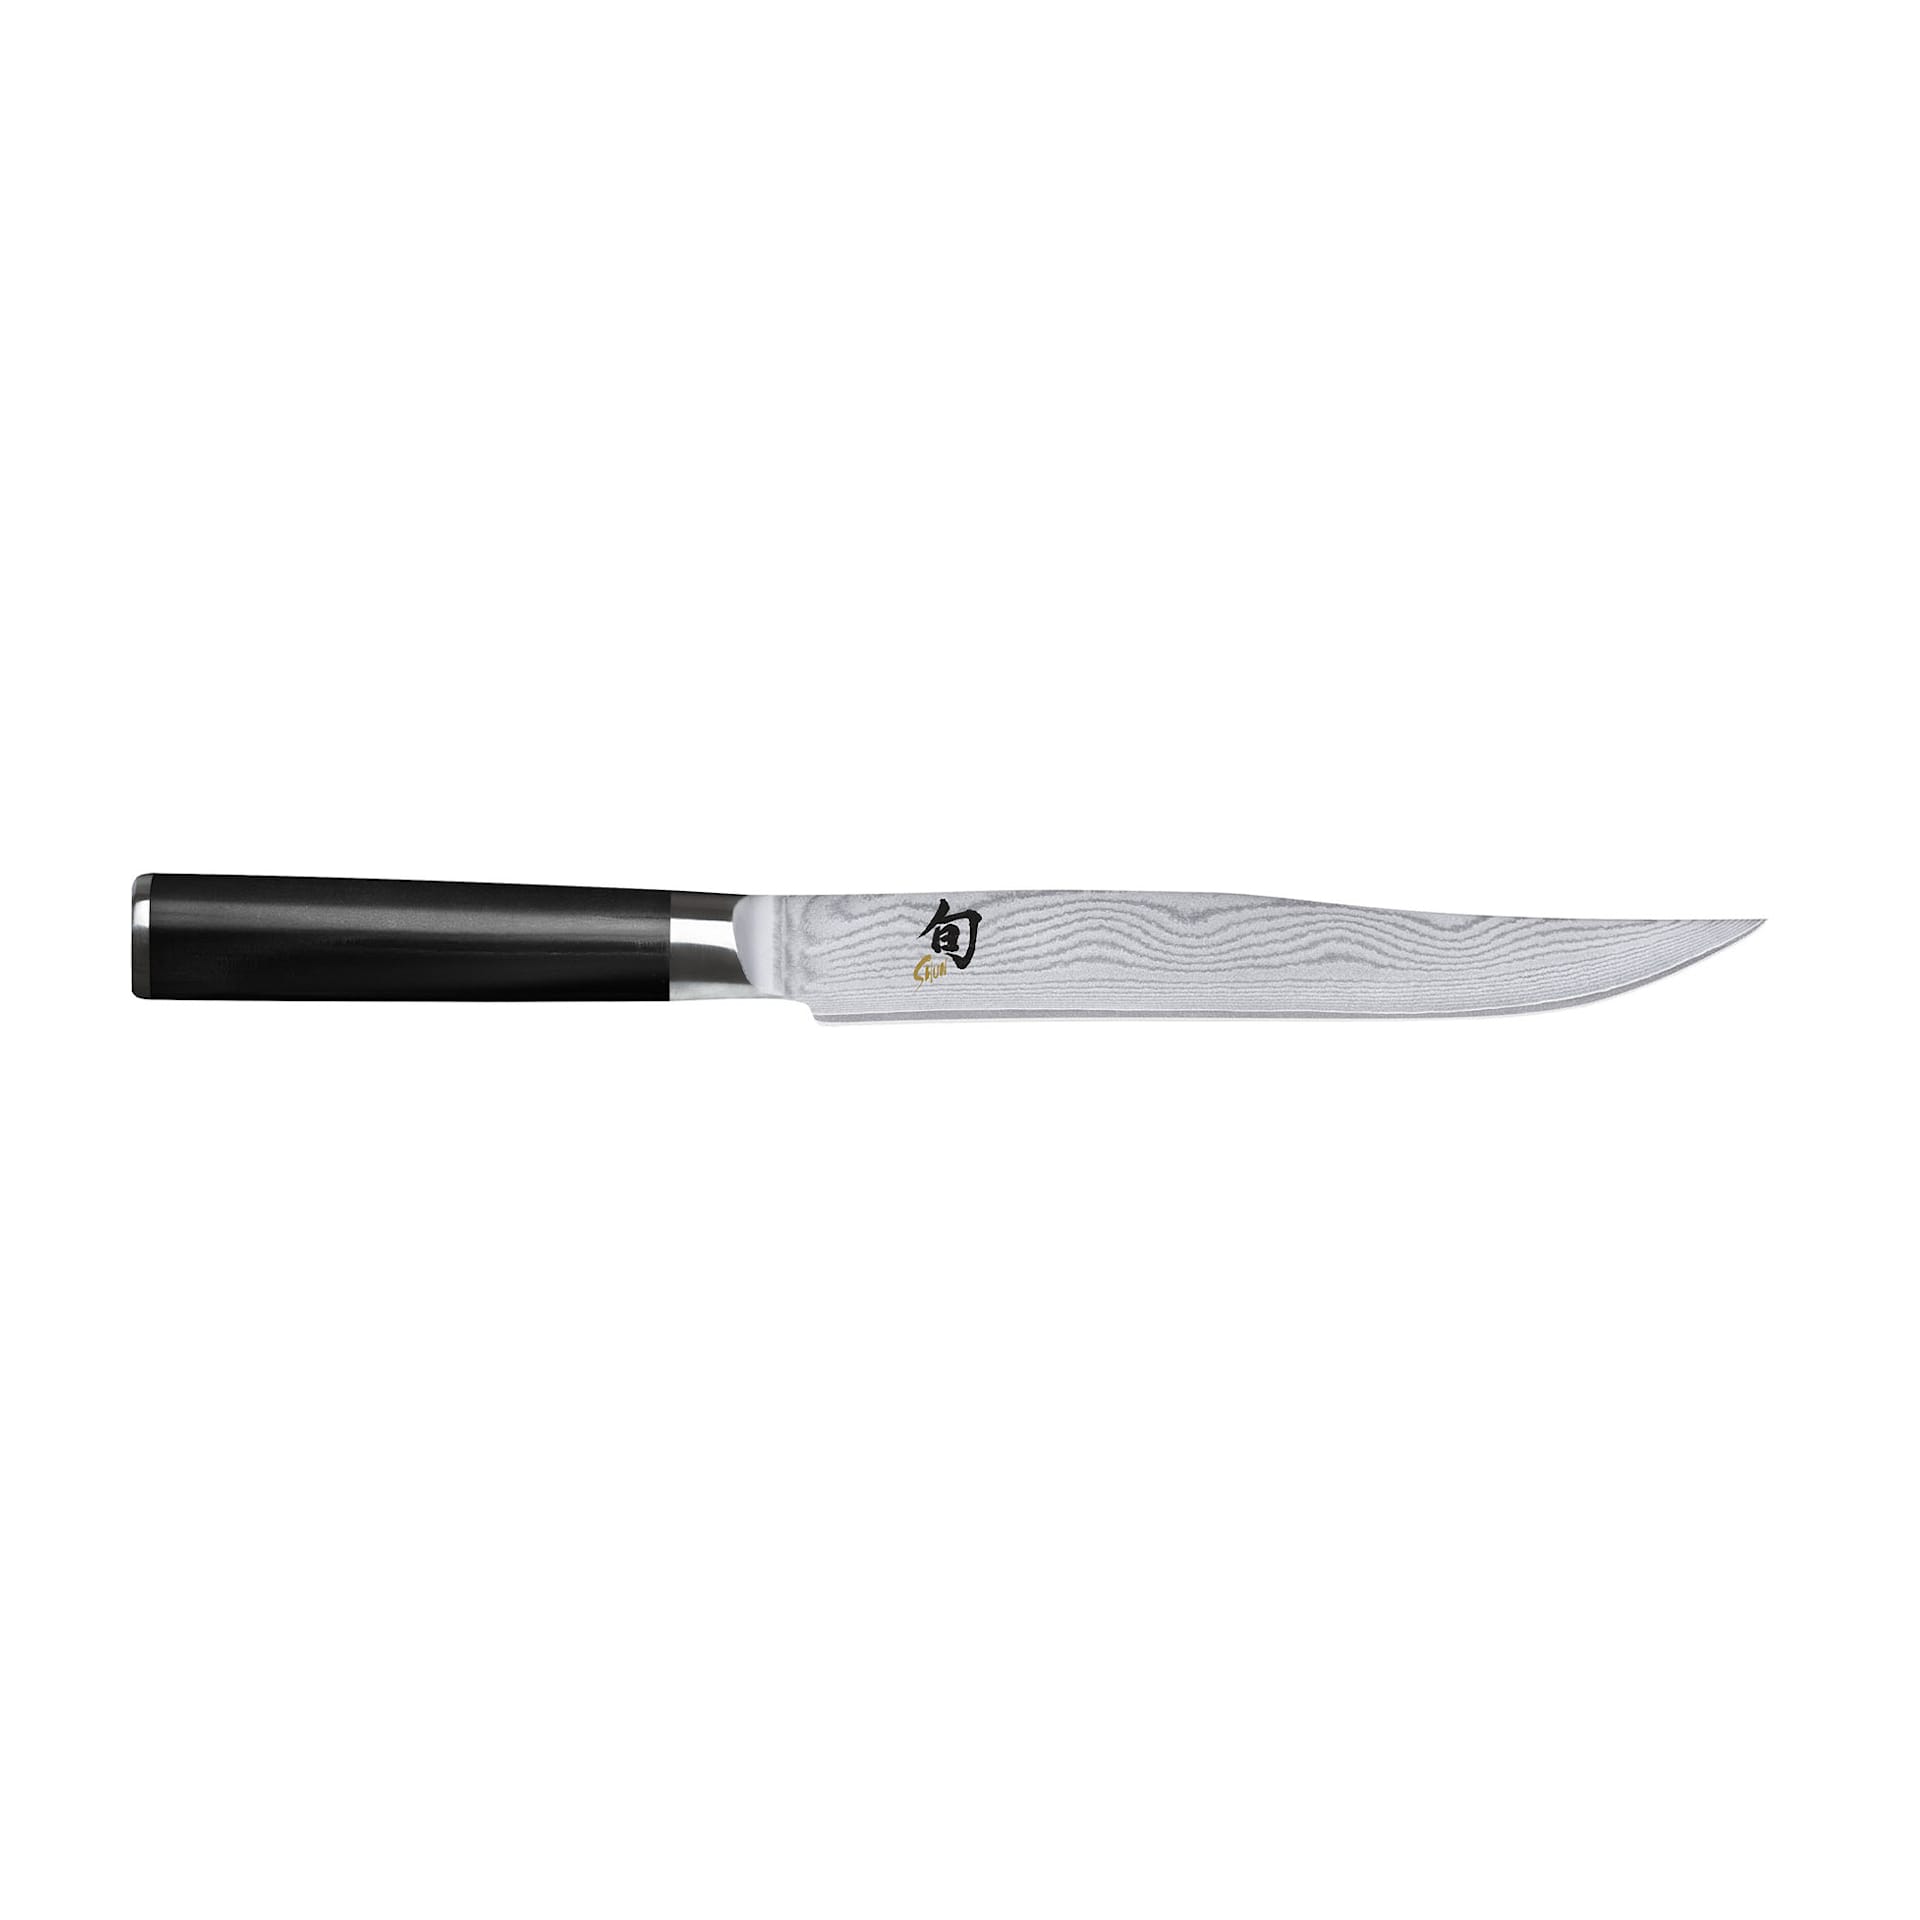 SHUN CLASSIC Carving knife 20 cm - KAI - NO GA